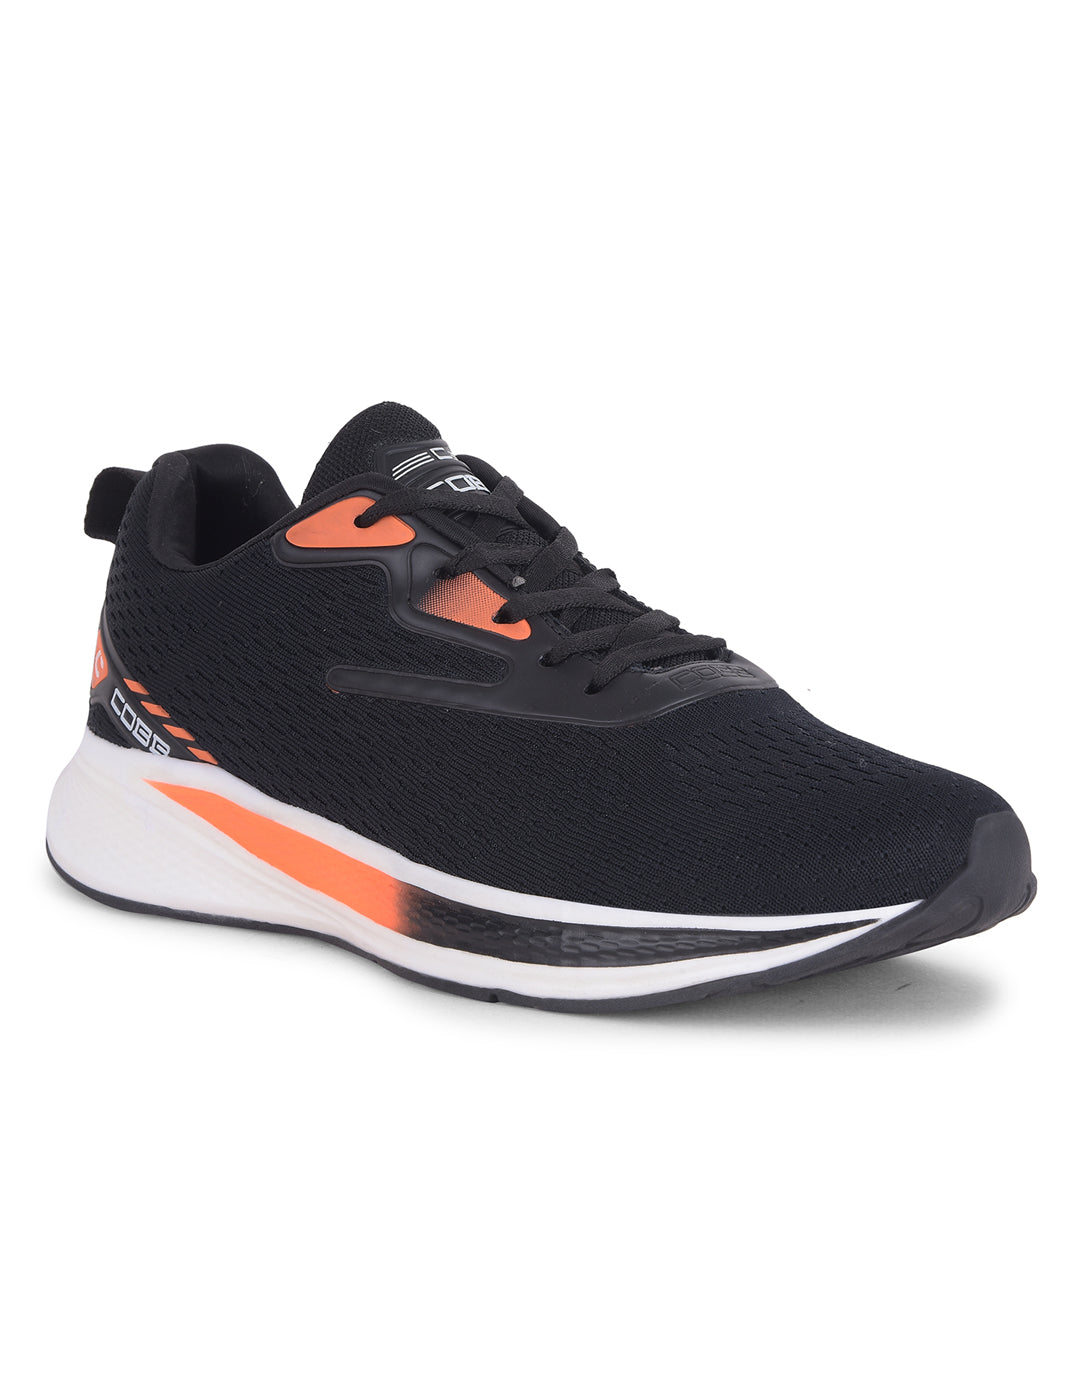 cobb black orange men's running shoes